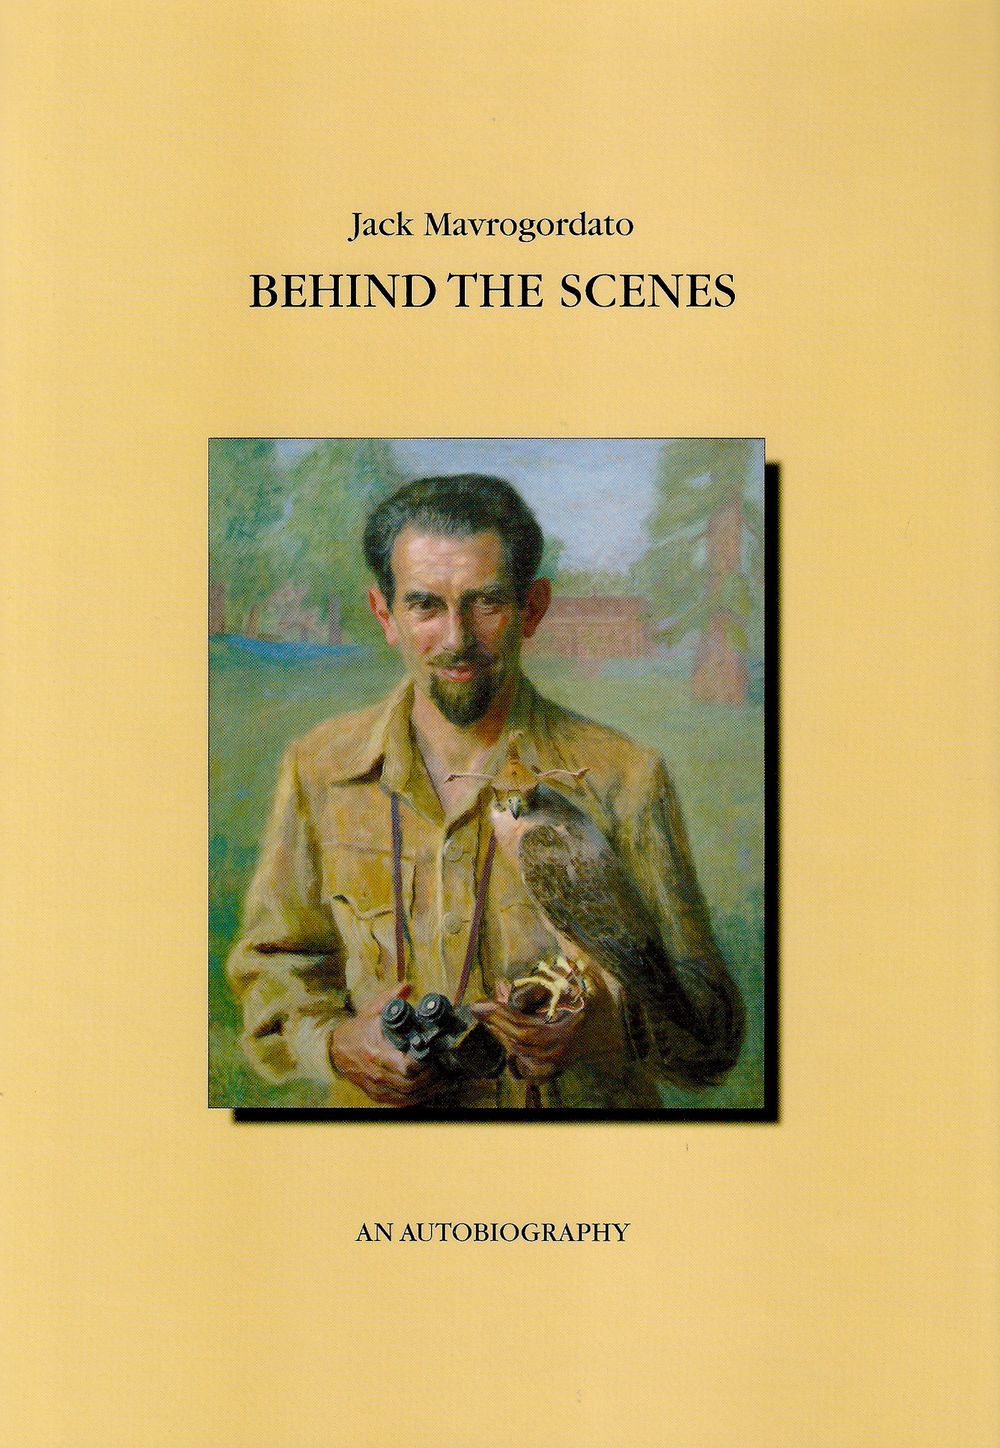 BEHIND THE SCENES: AN AUTOBIOGRAPHY. Volume III OF THE COMPLETE WORKS OF JACK MAVROGORDATO. - Mavrogordato (Jack).